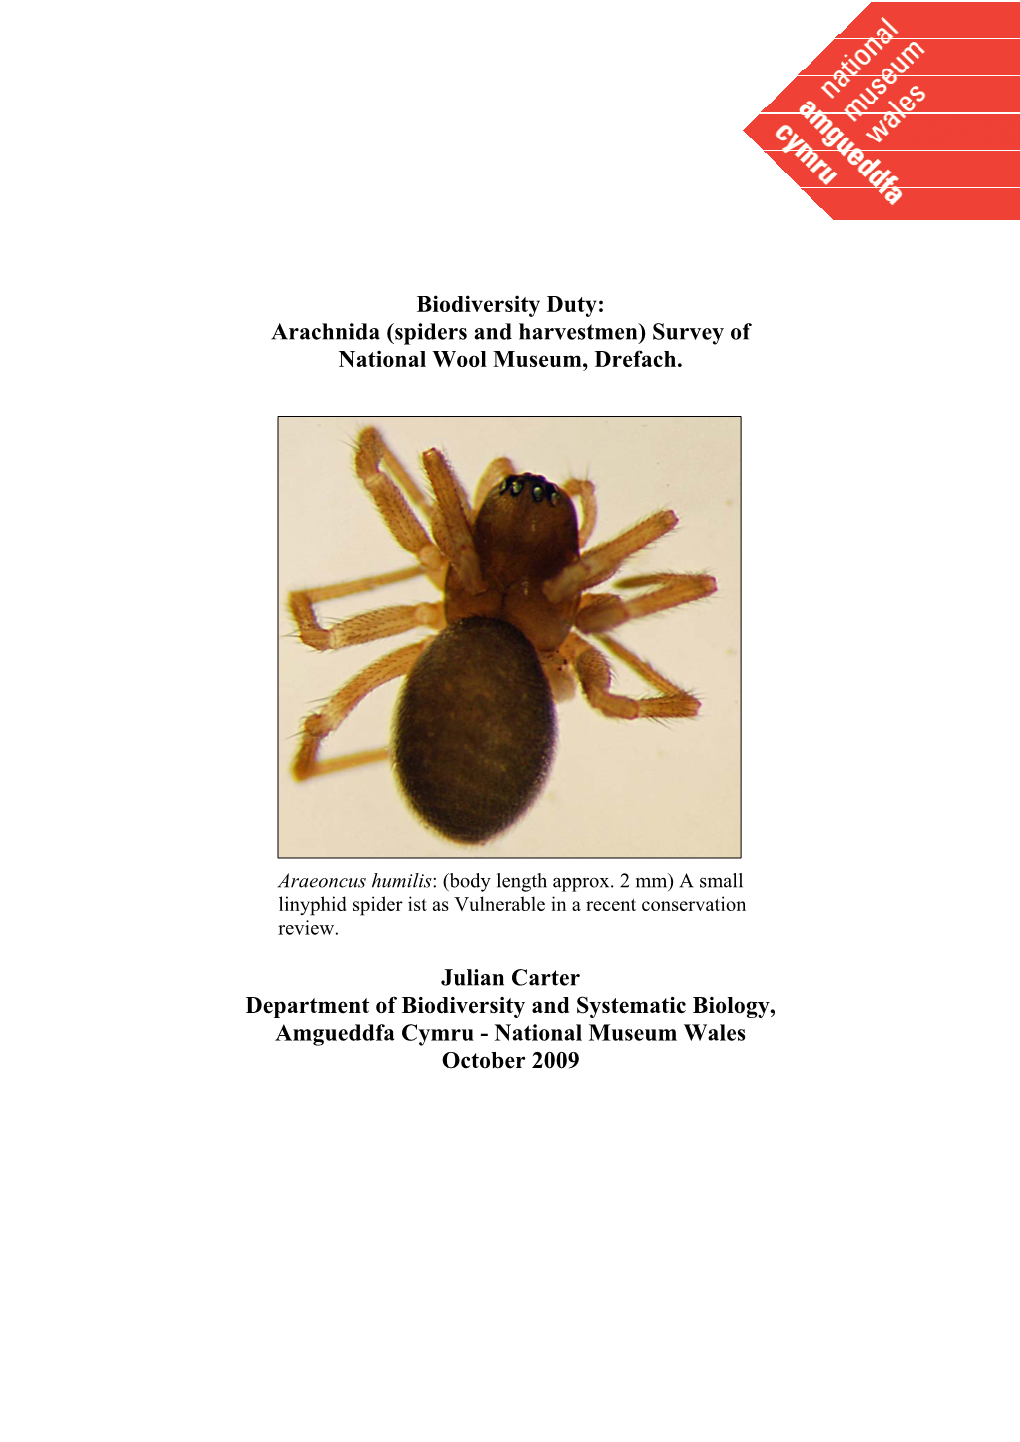 Biodiversity Duty: Arachnida (Spiders and Harvestmen) Survey of National Wool Museum, Drefach